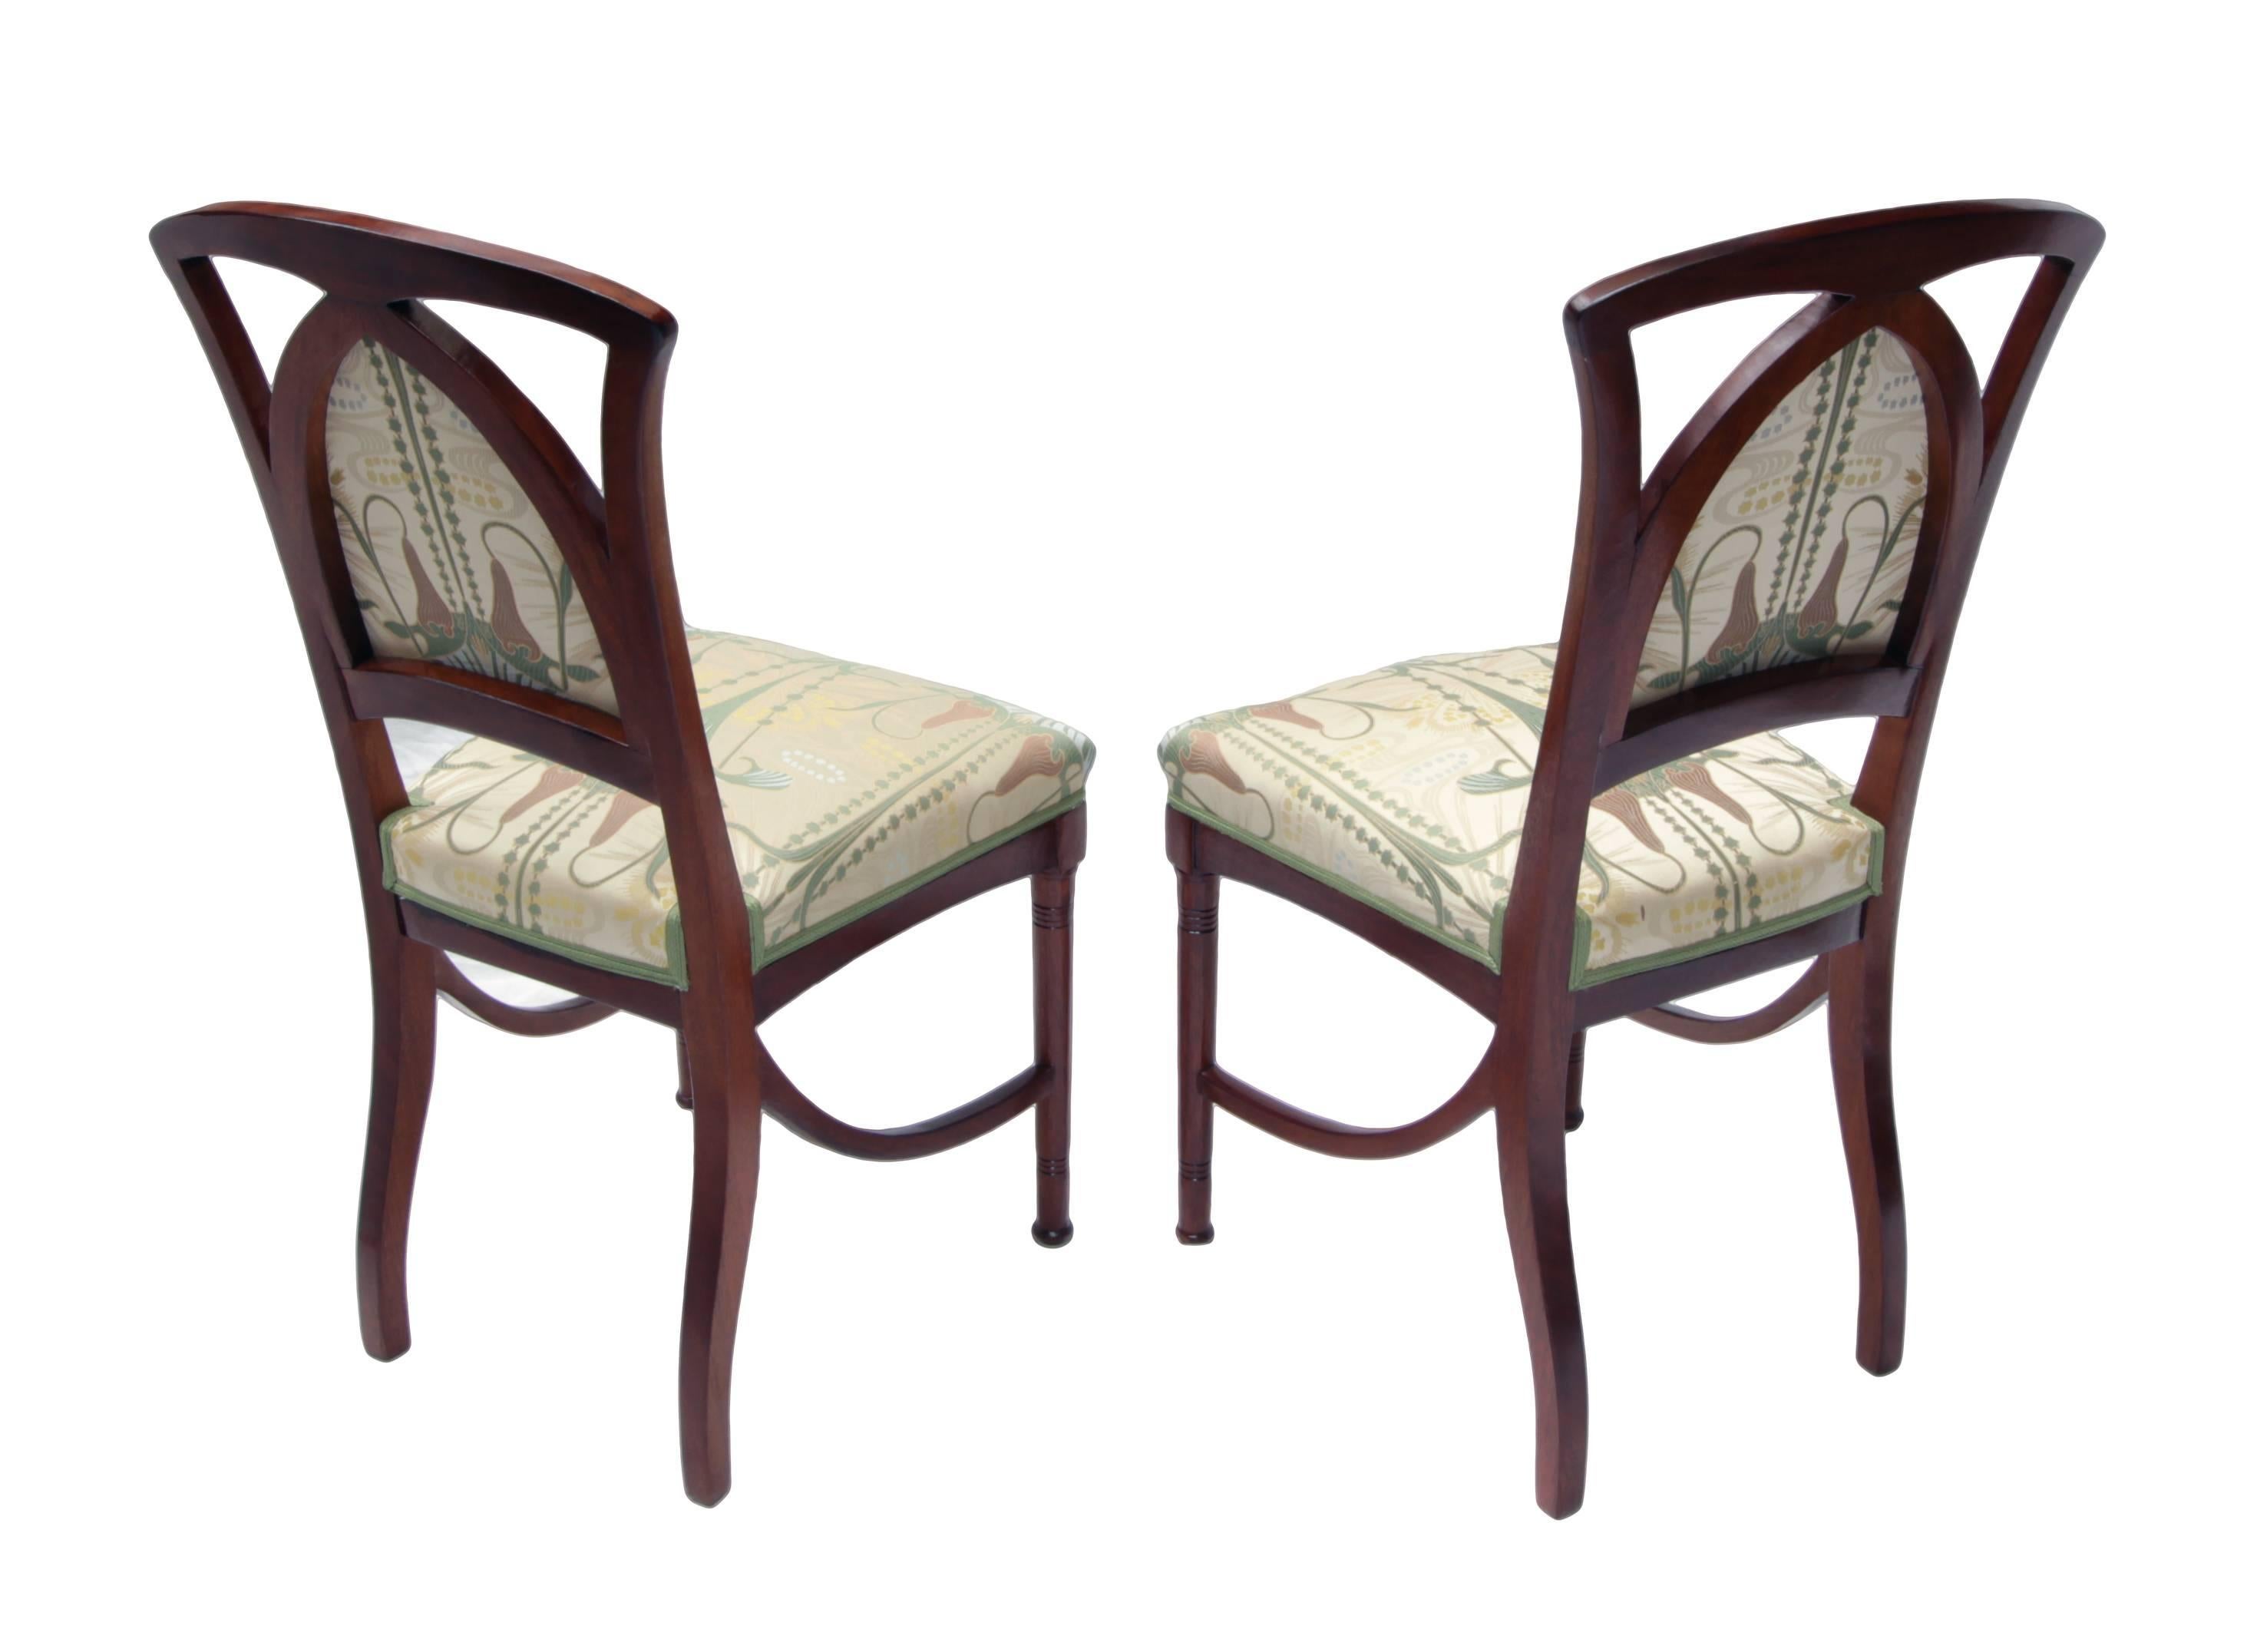 Art Nouveau Mahogany Seating Group, Set of Five (Art nouveau)